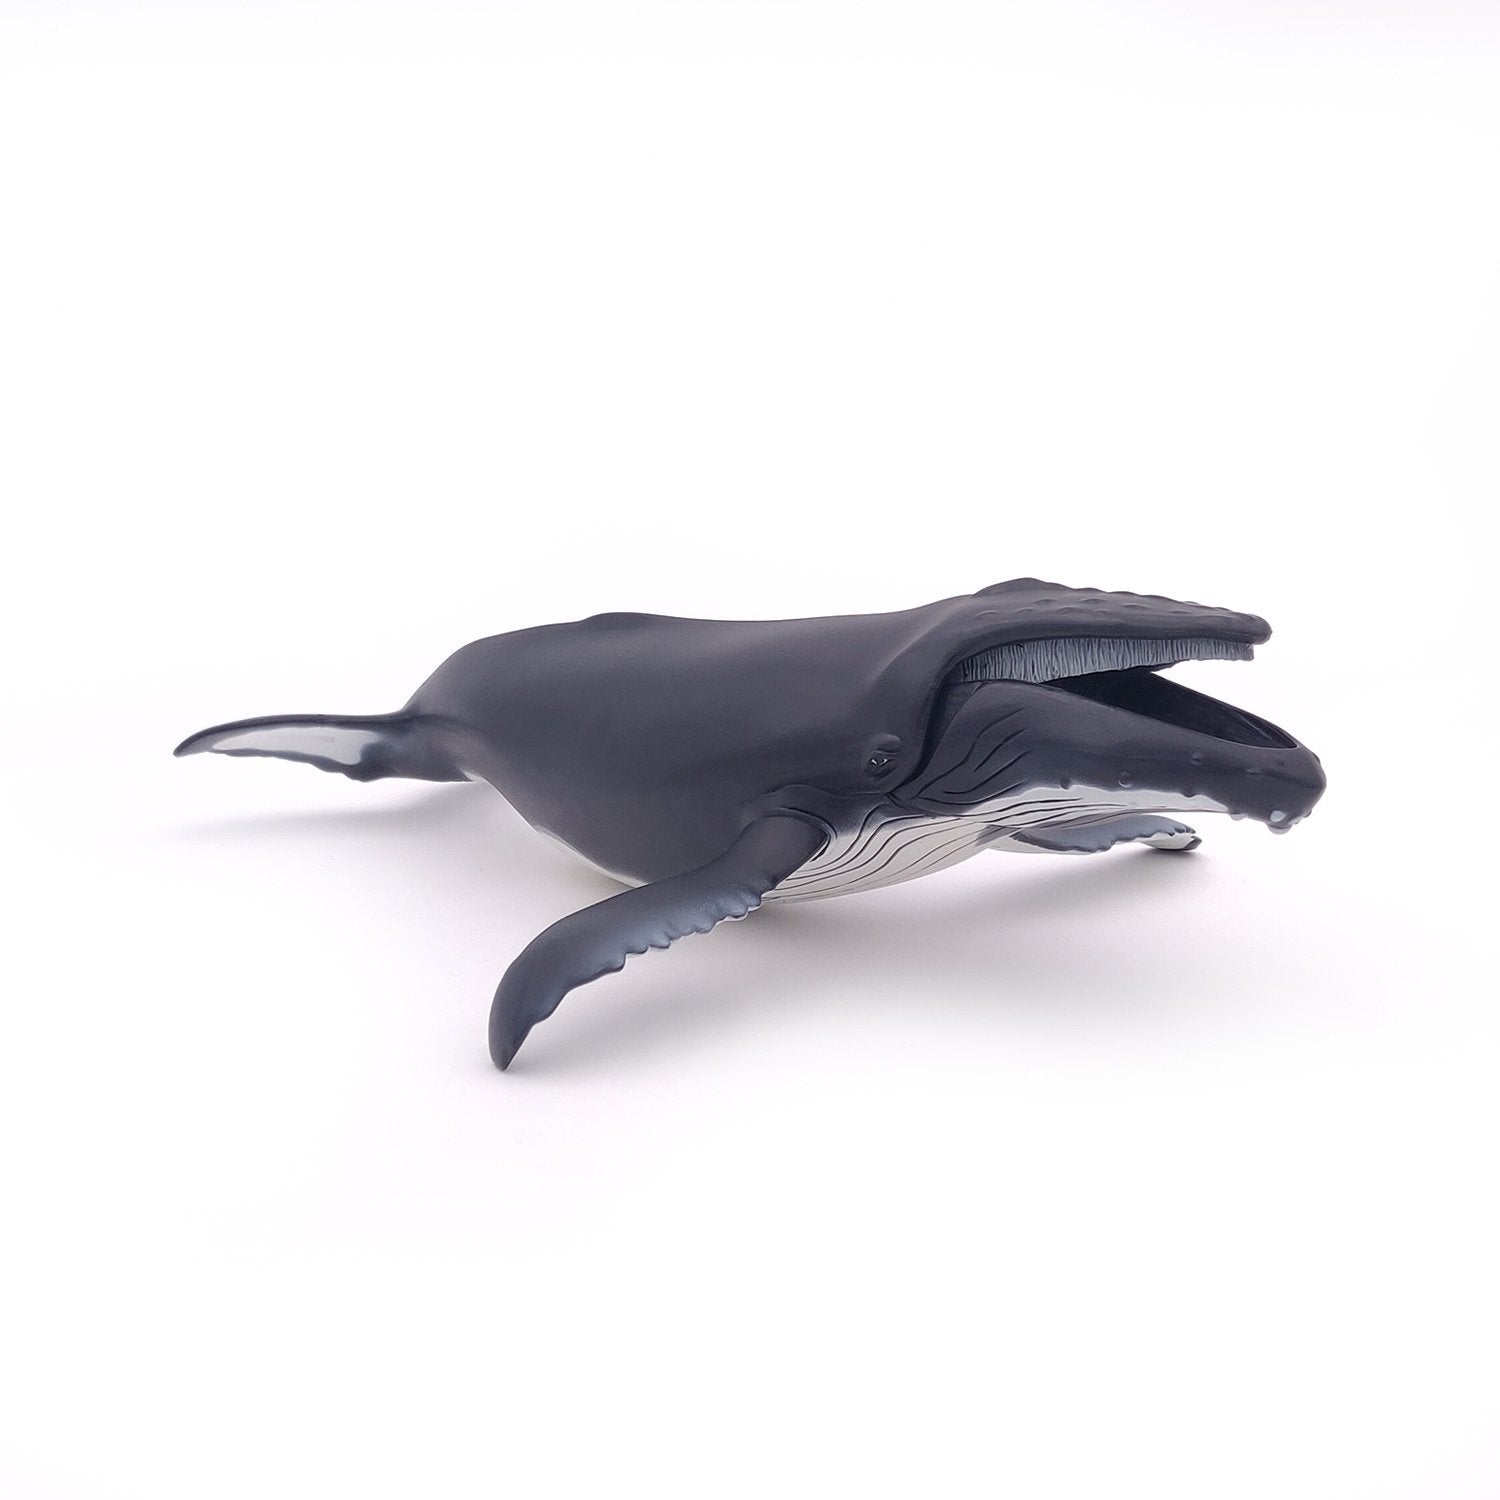 Papo humpback whale figure